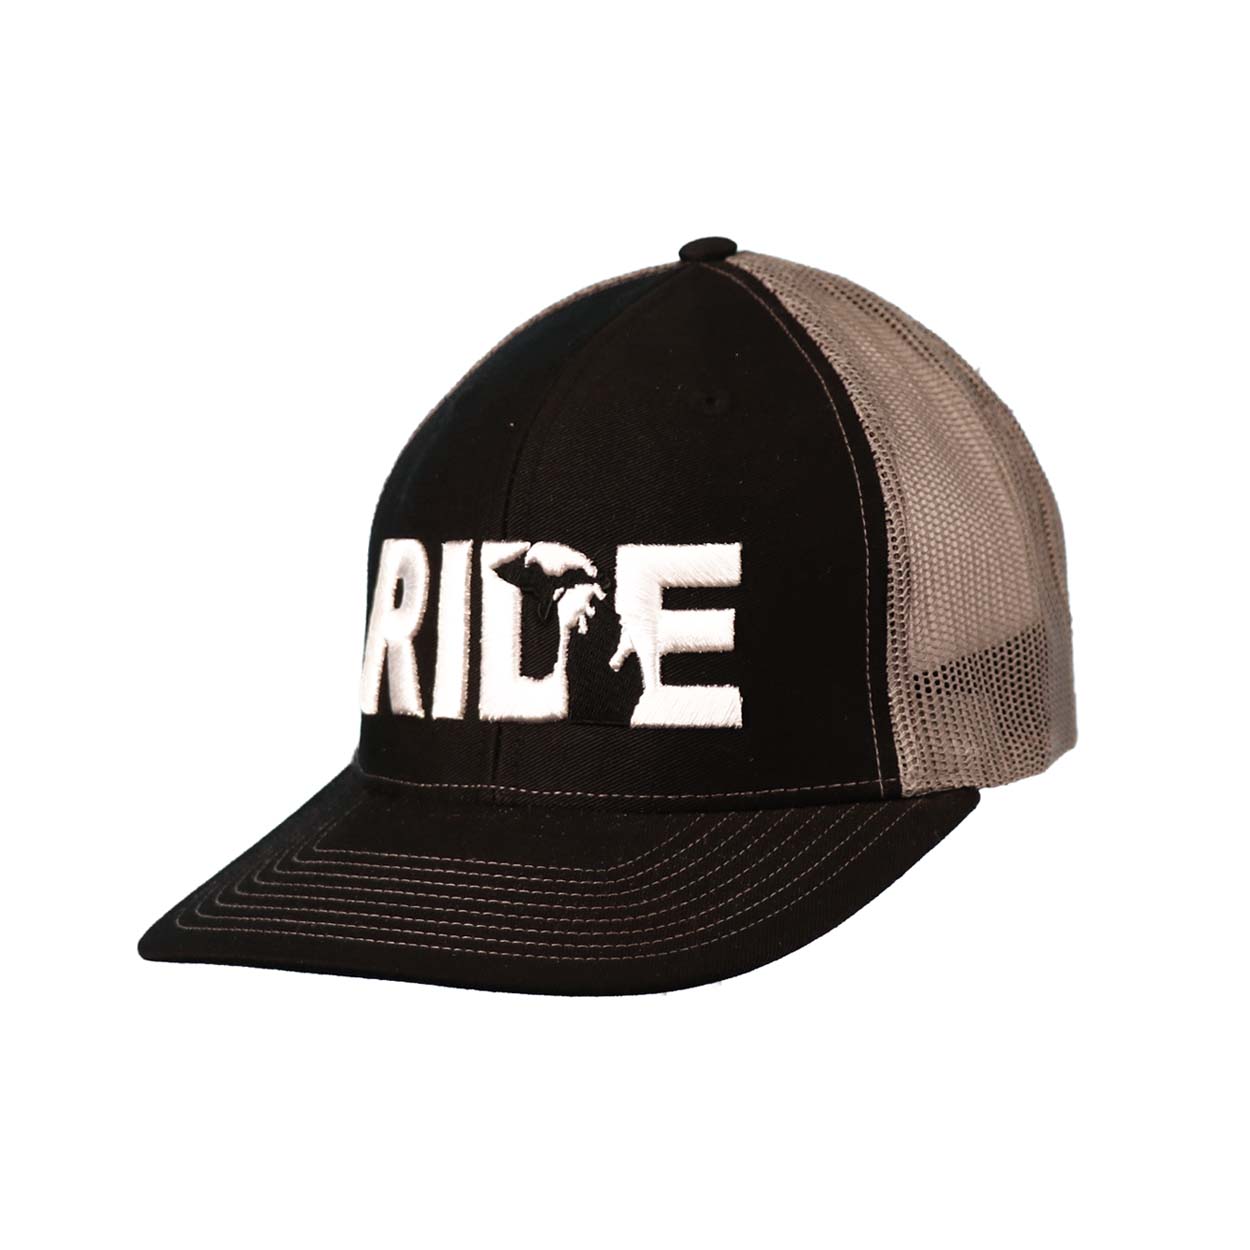 Ride Michigan Classic Embroidered Snapback Trucker Hat Black/Gray